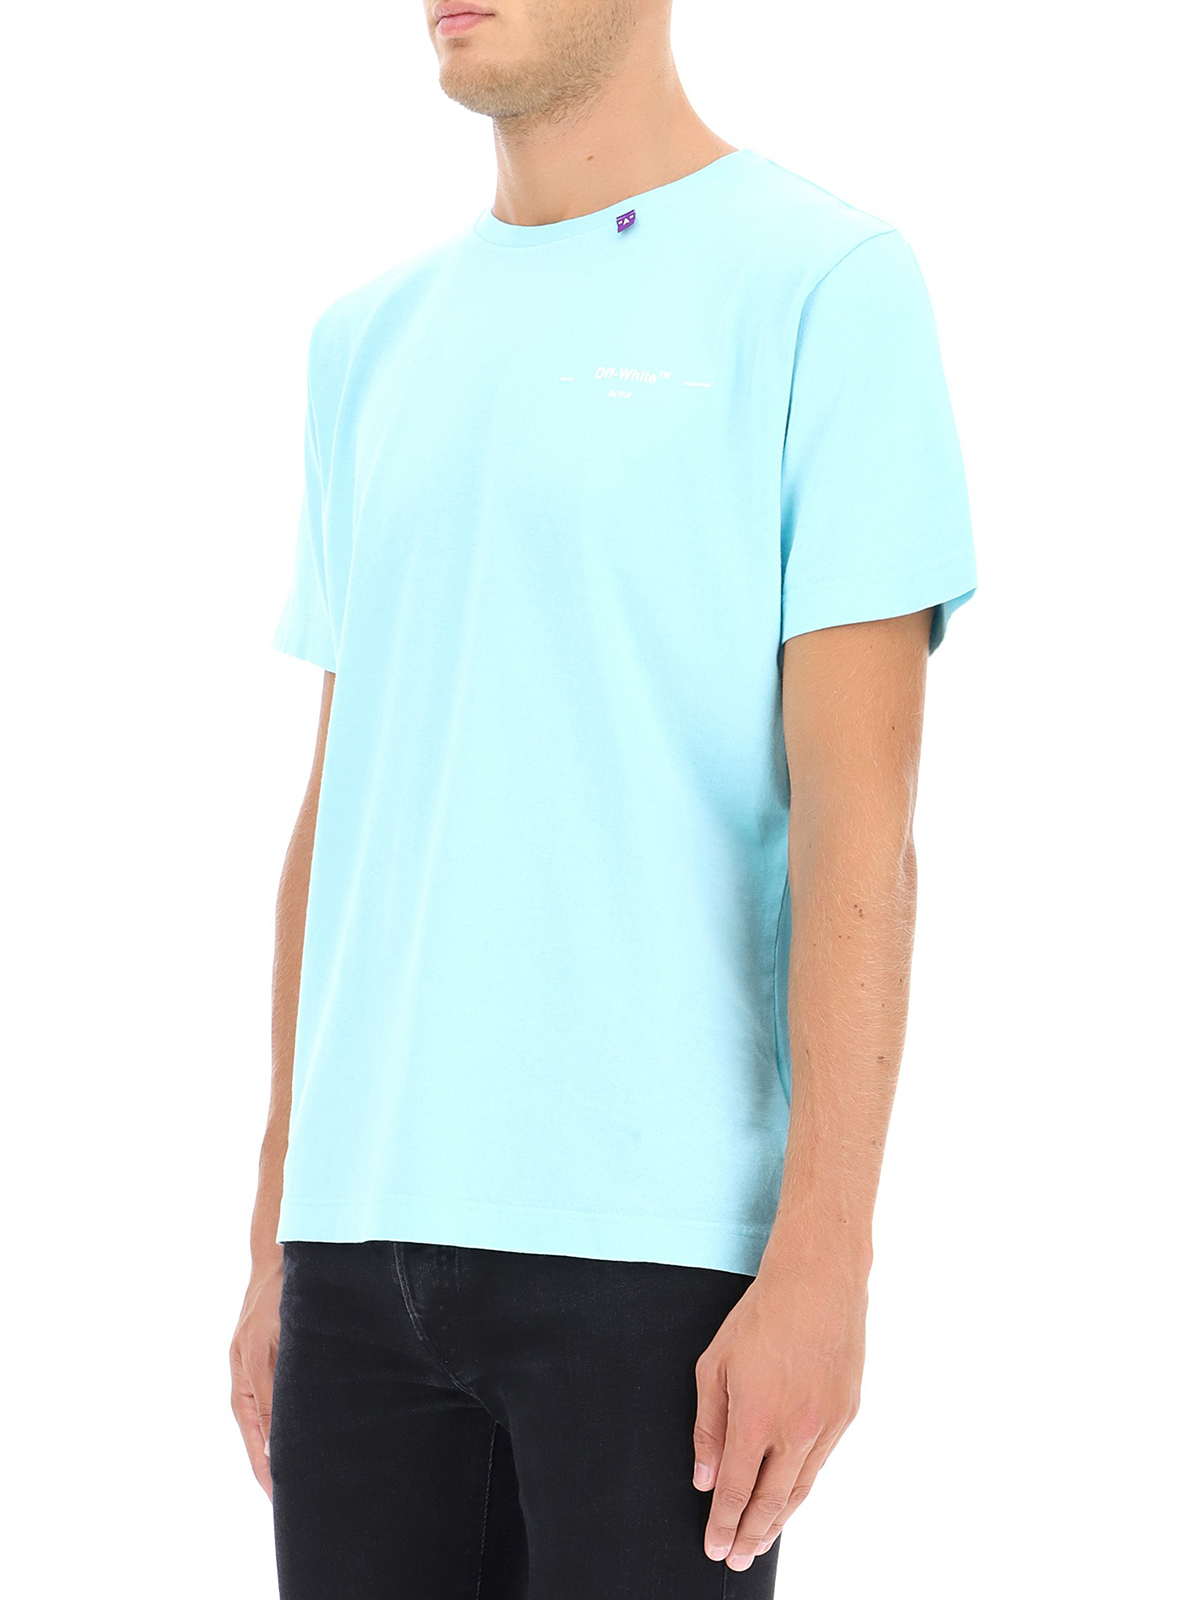 klippe mandskab absurd Tシャツ Off-White - Tシャツ - ライトブルー - OMAA055F181850043100